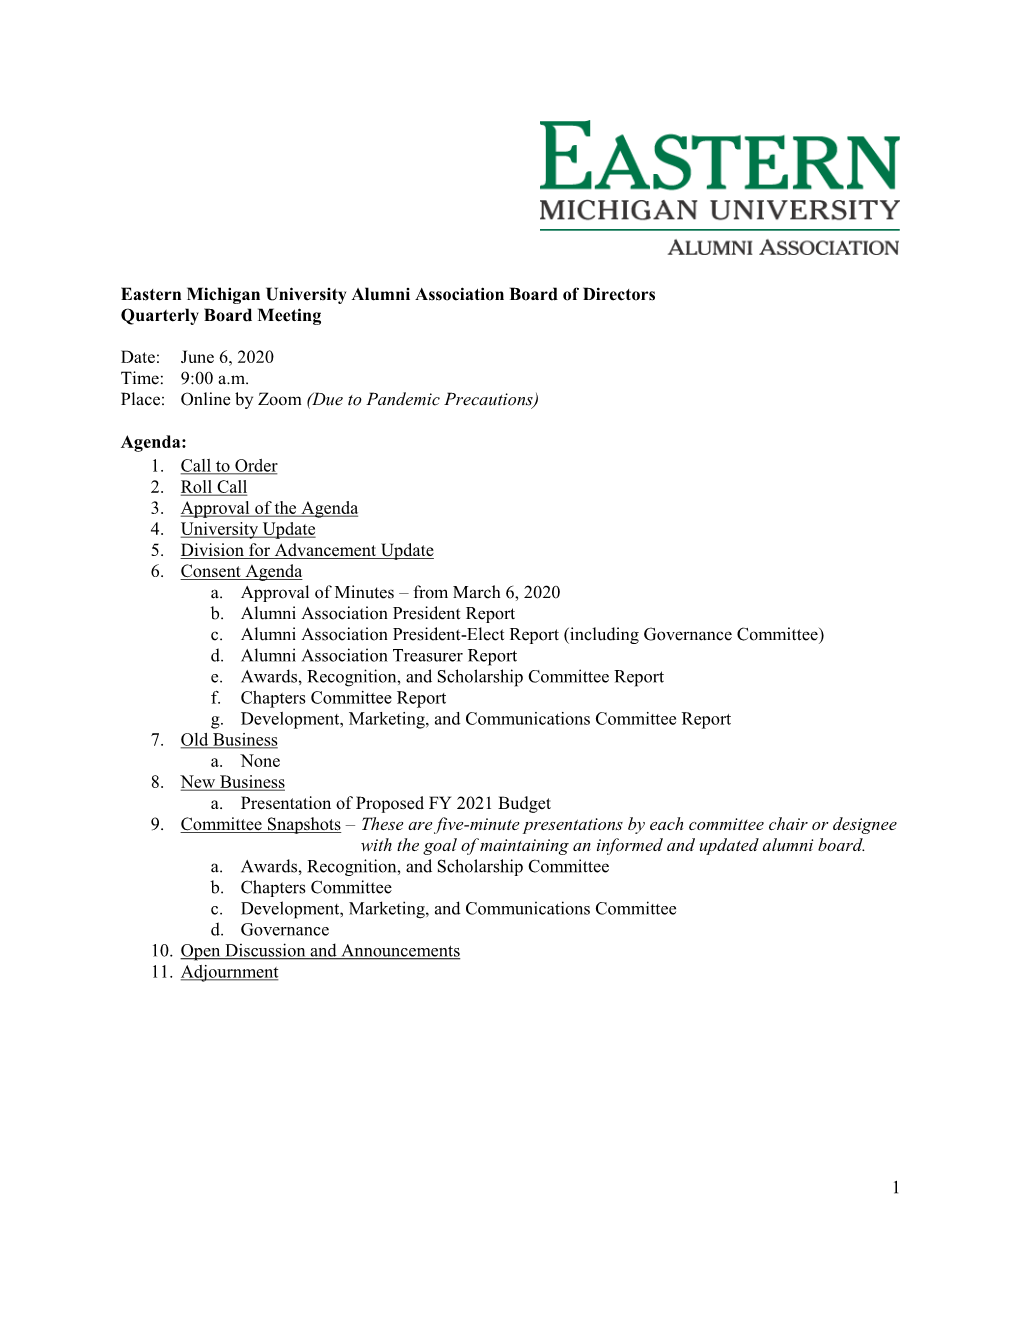 Eastern Michigan University Alumni Association Board of Directors Quarterly Board Meeting